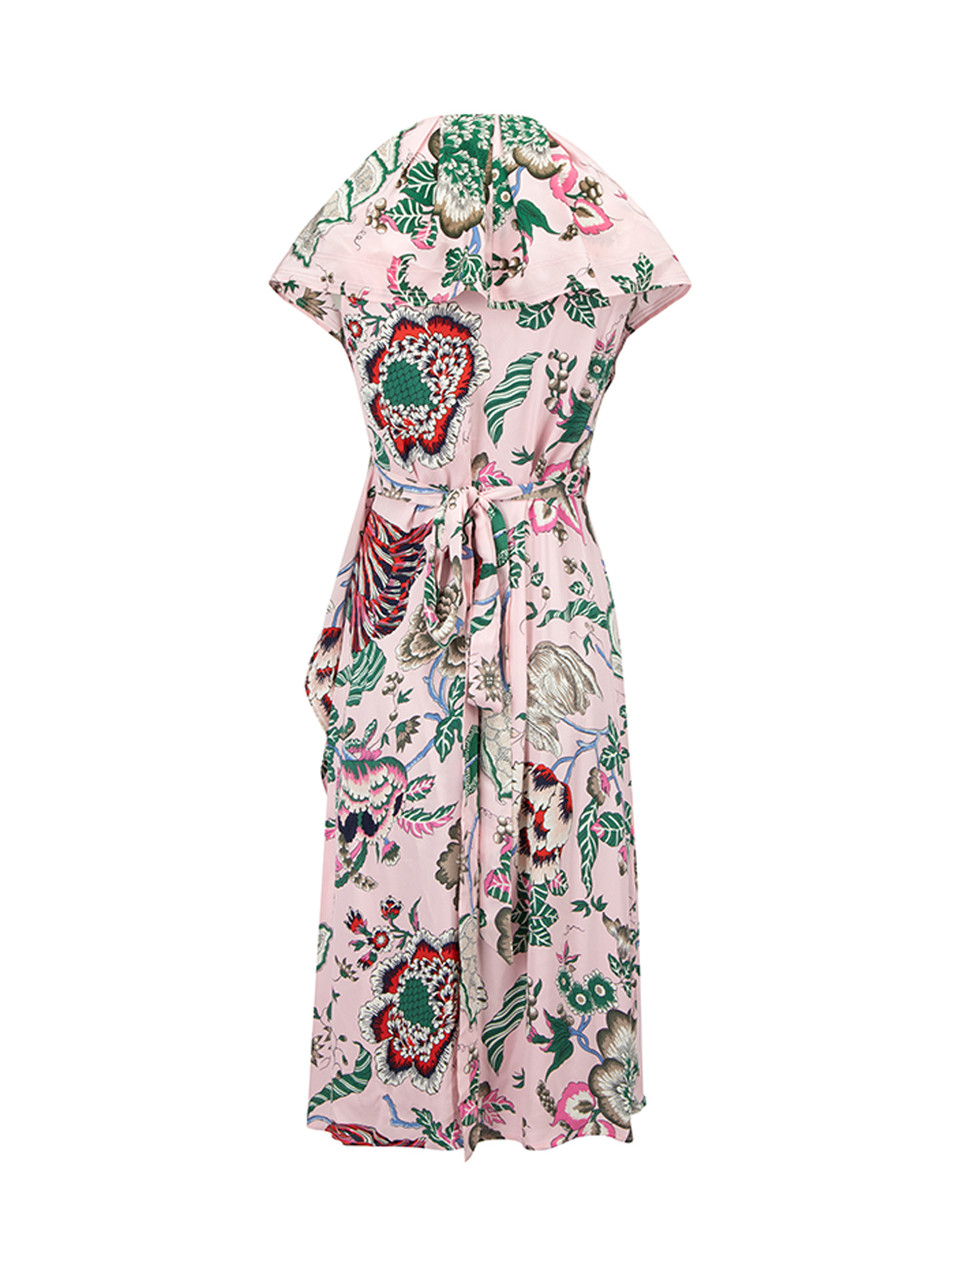 Tory Burch Pink Floral Print Wrap Knee Length Dress